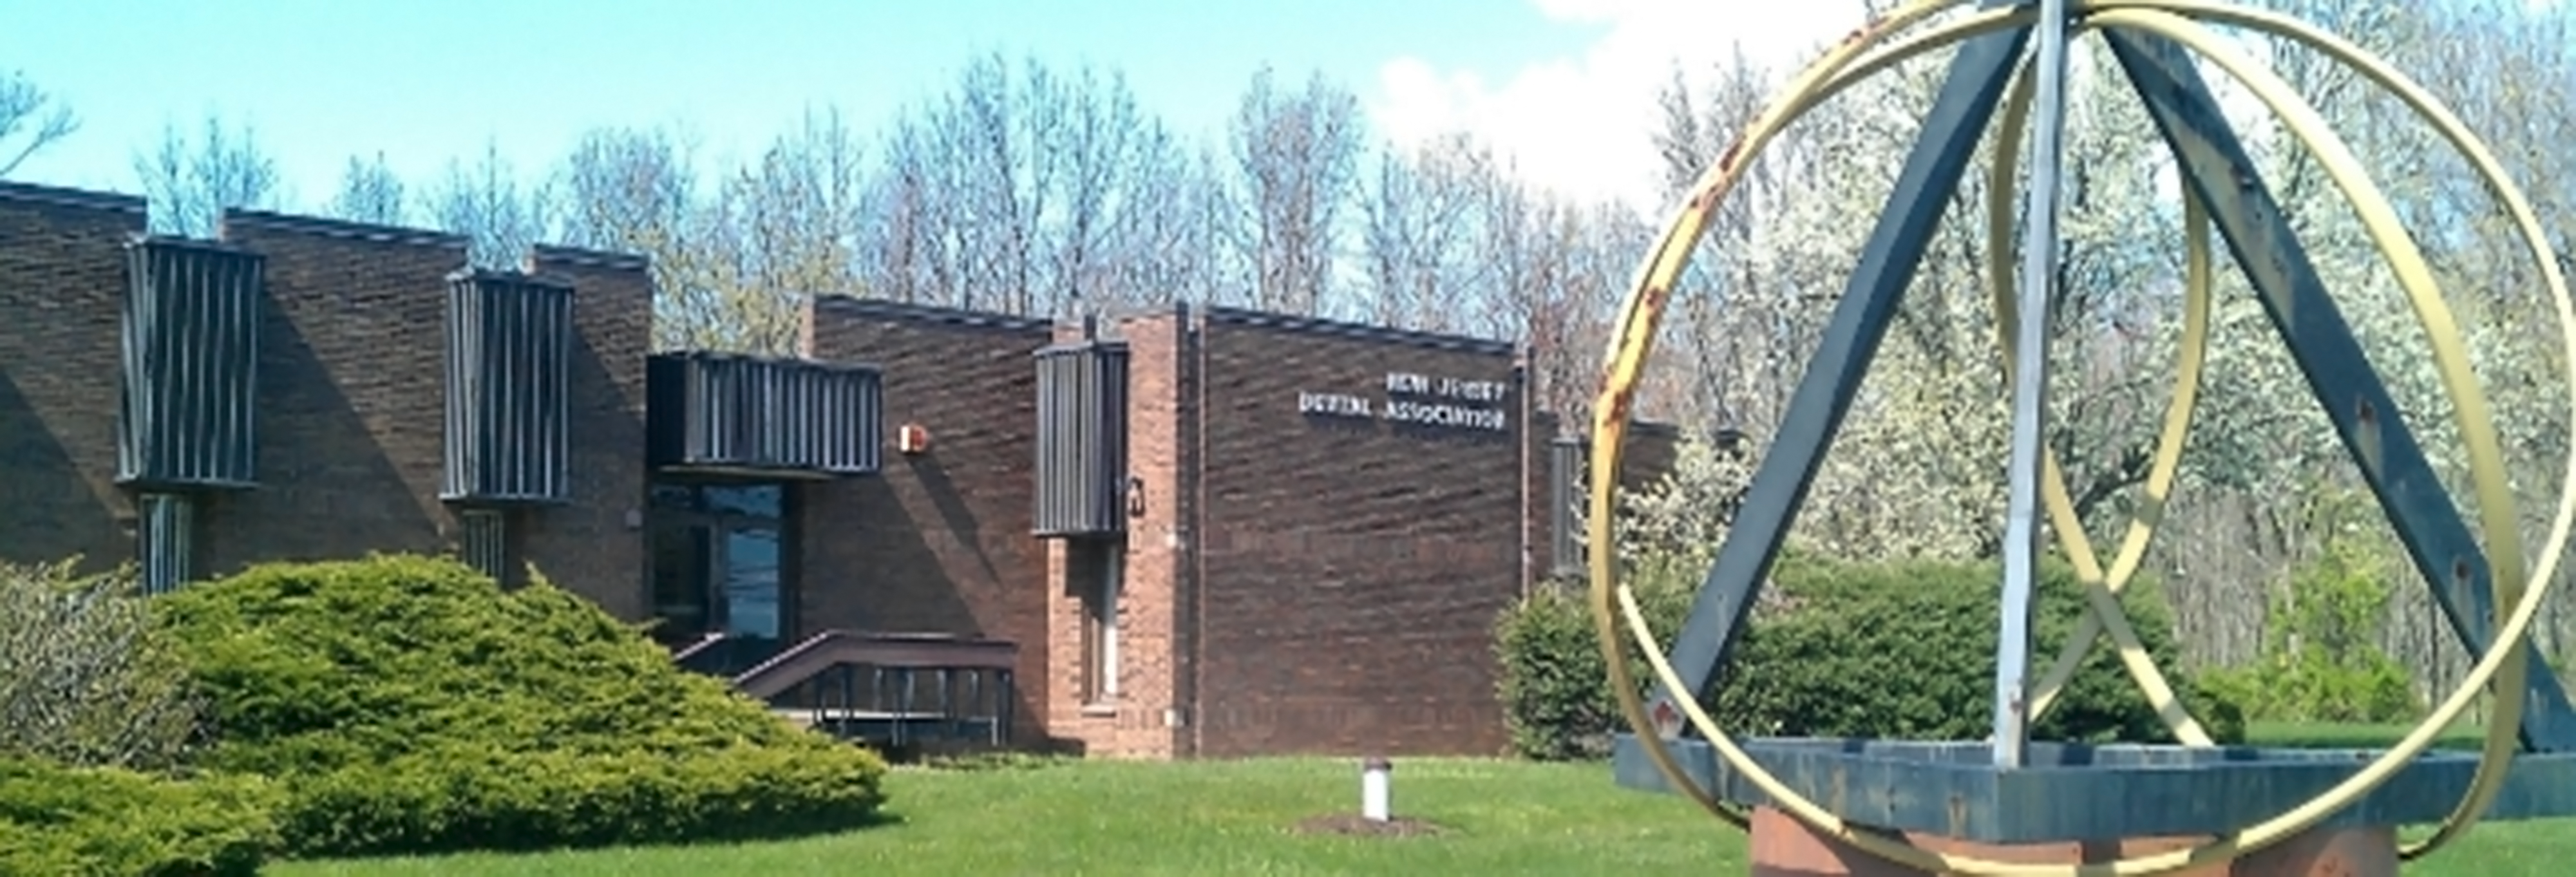 New Jersey Dental Association headquarters building